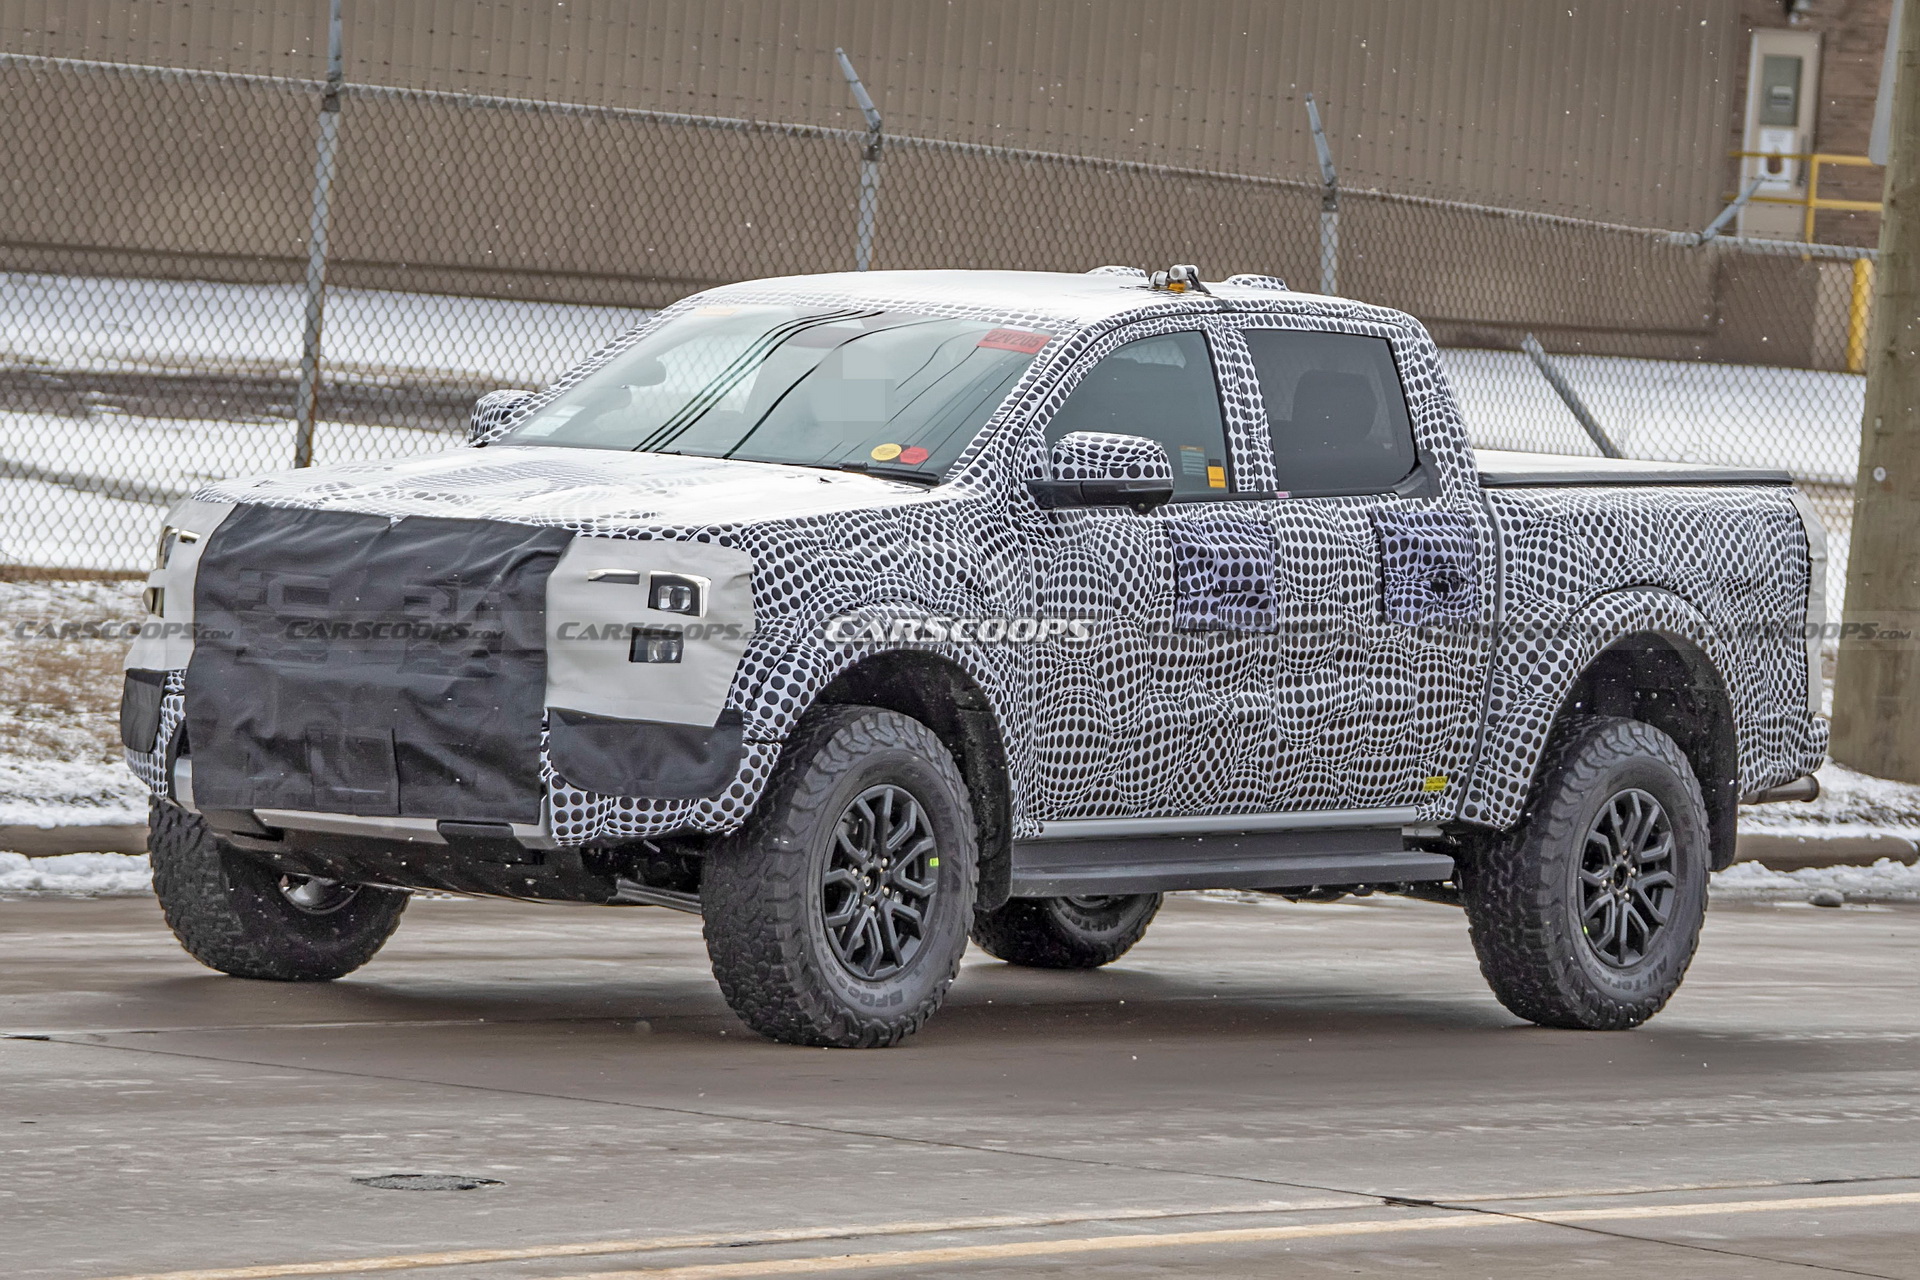 Ford’s Next-Gen Ranger Raptor Makes Spy Debut Next To Bronco Warthog